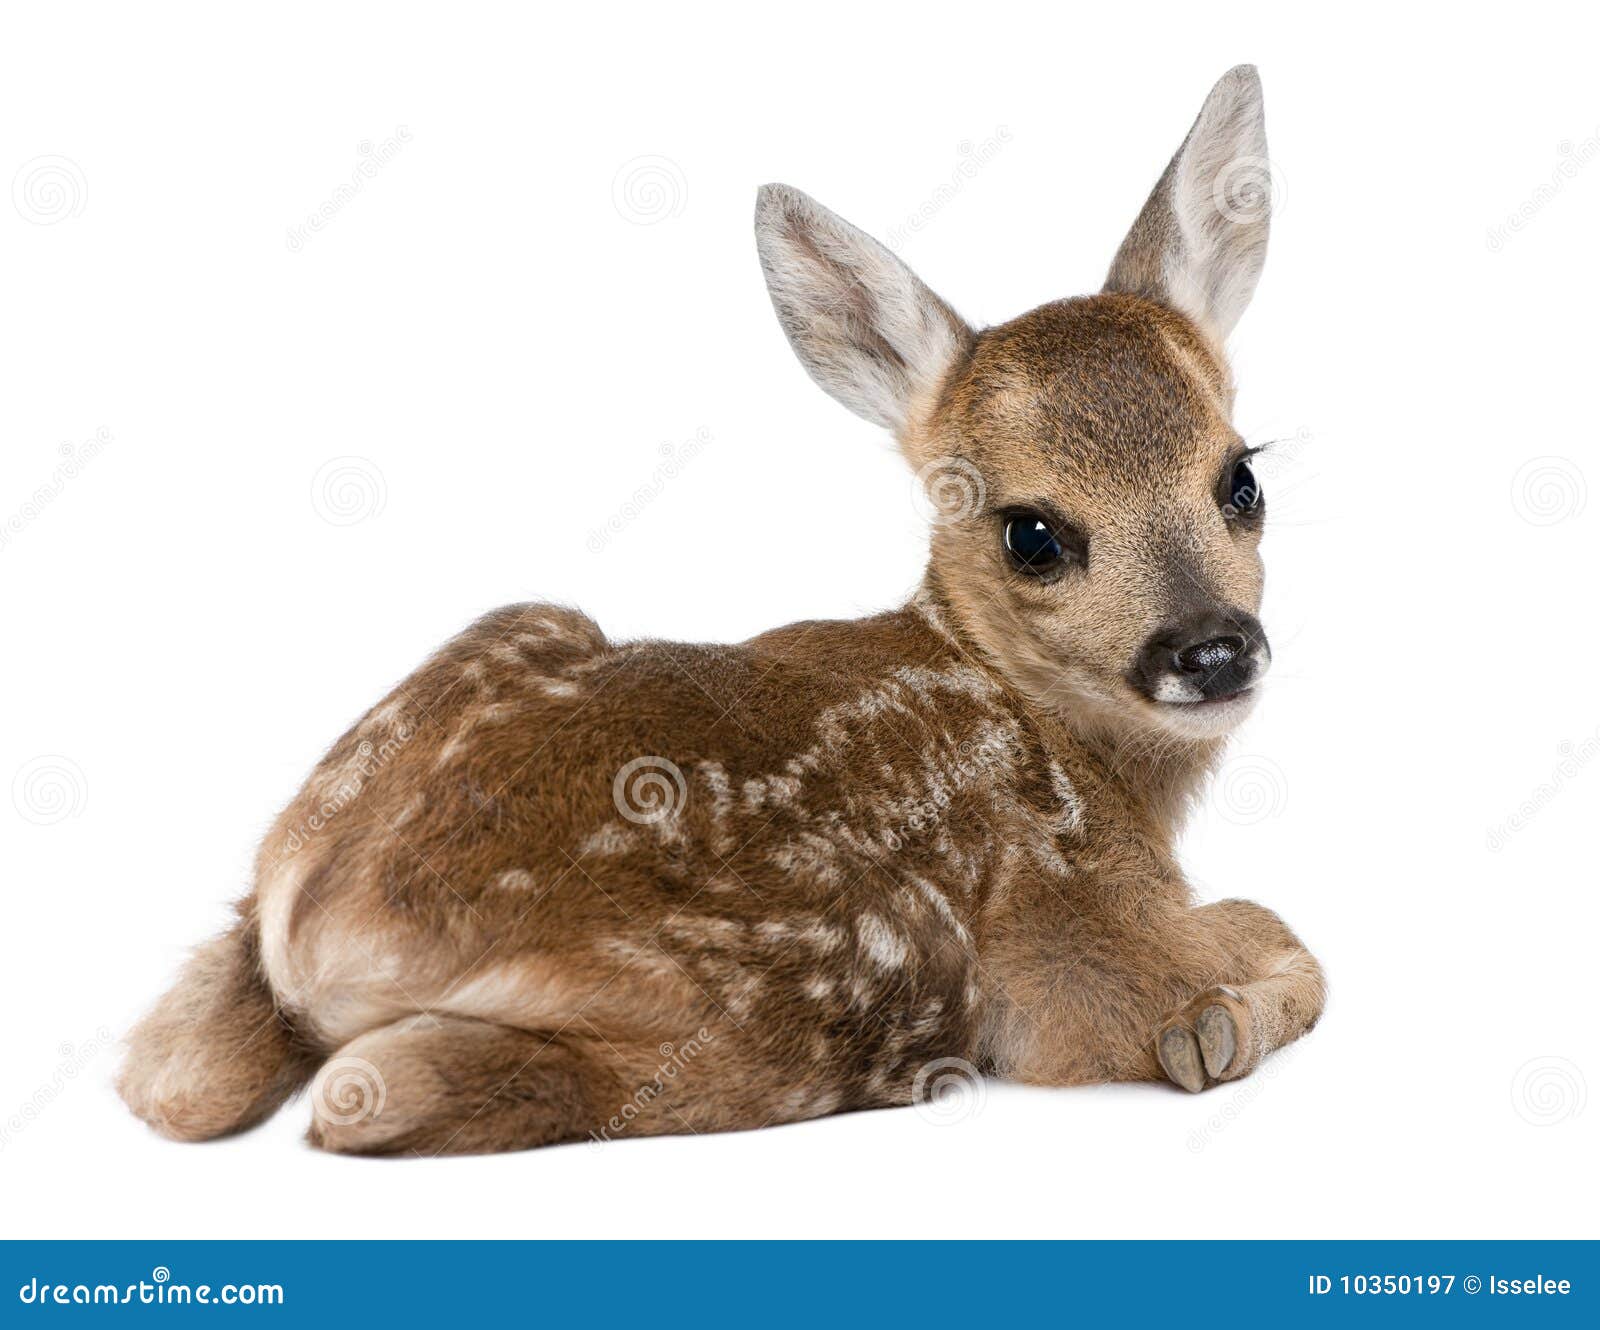 roe deer fawn - capreolus capreolus (15 days old)